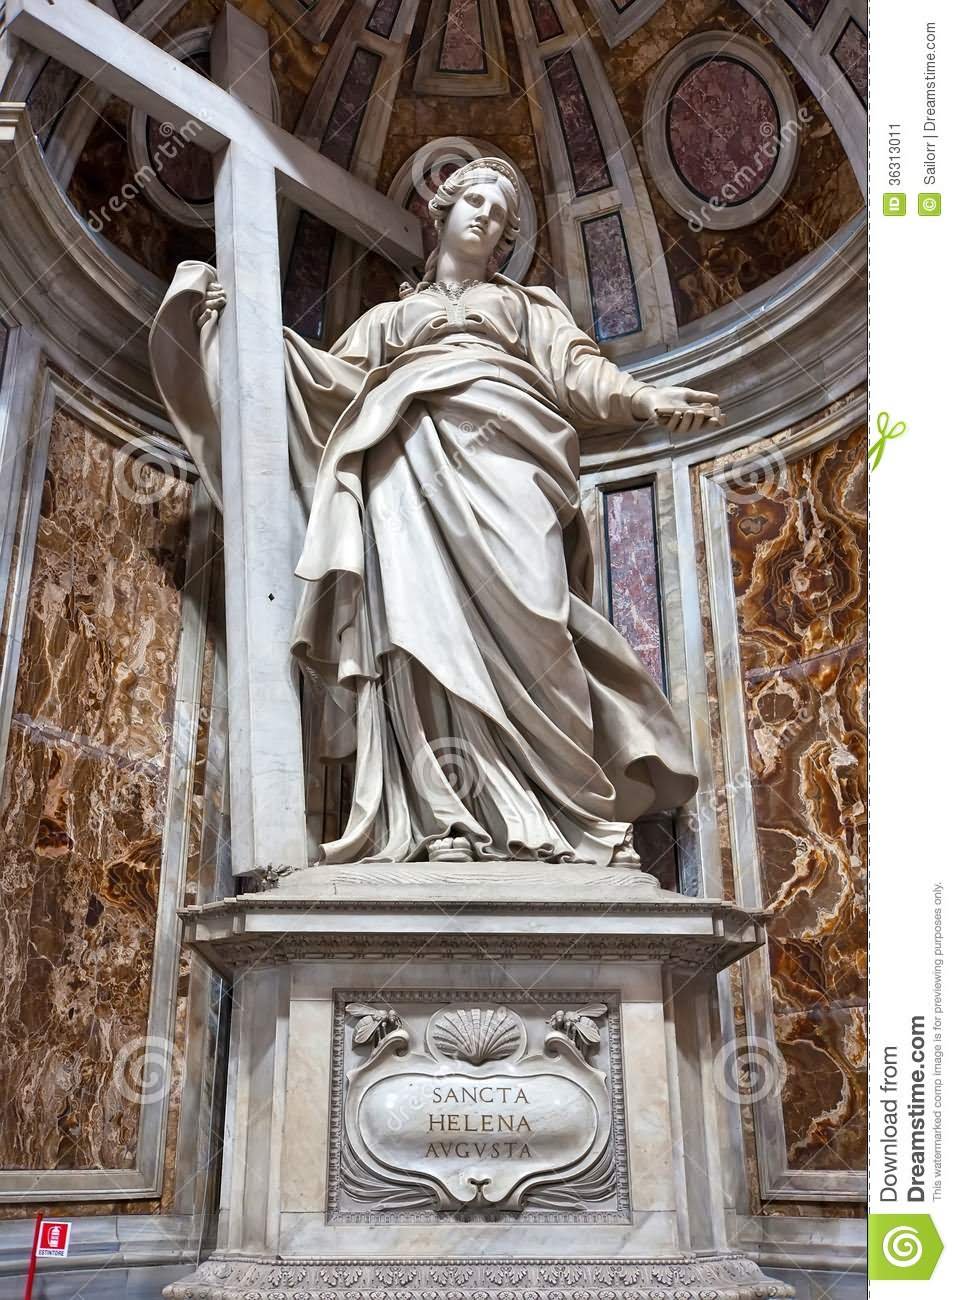 Saint Helena Statue Inside St. Peter's Basilica